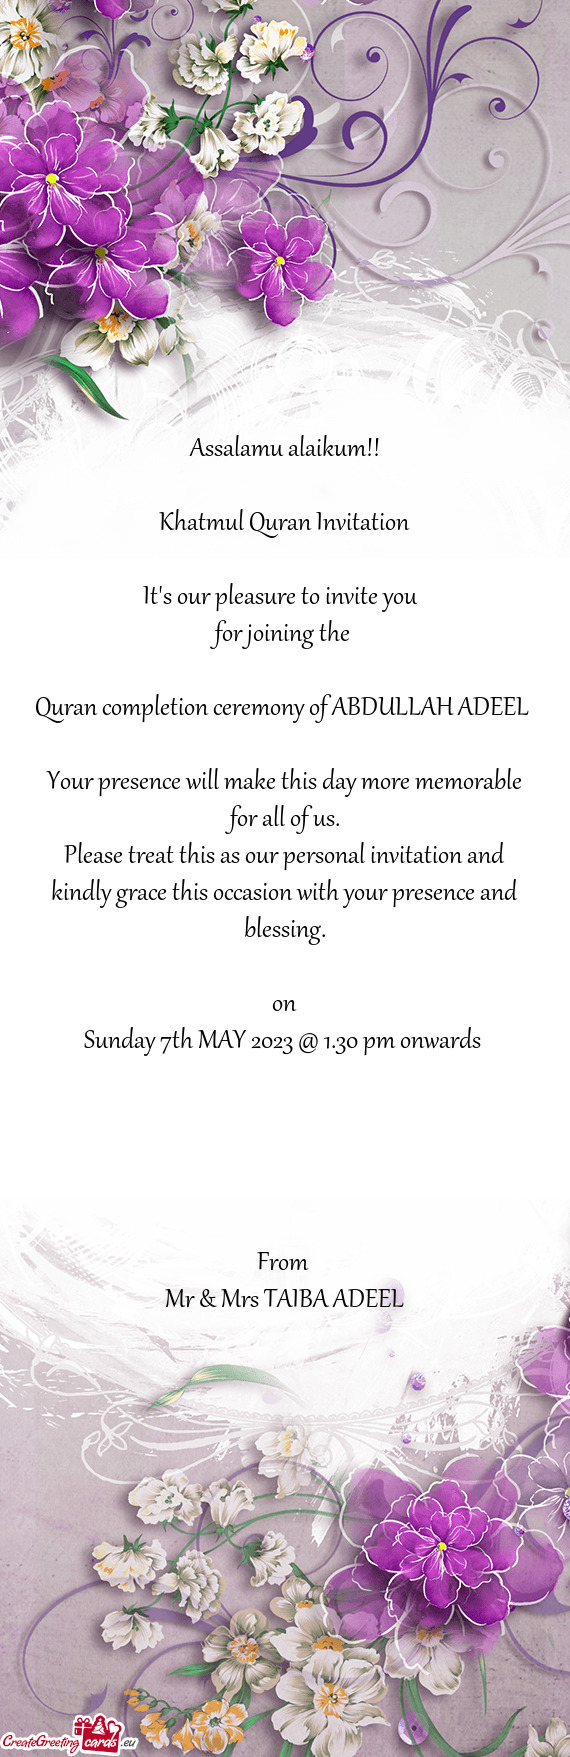 Quran completion ceremony of ABDULLAH ADEEL